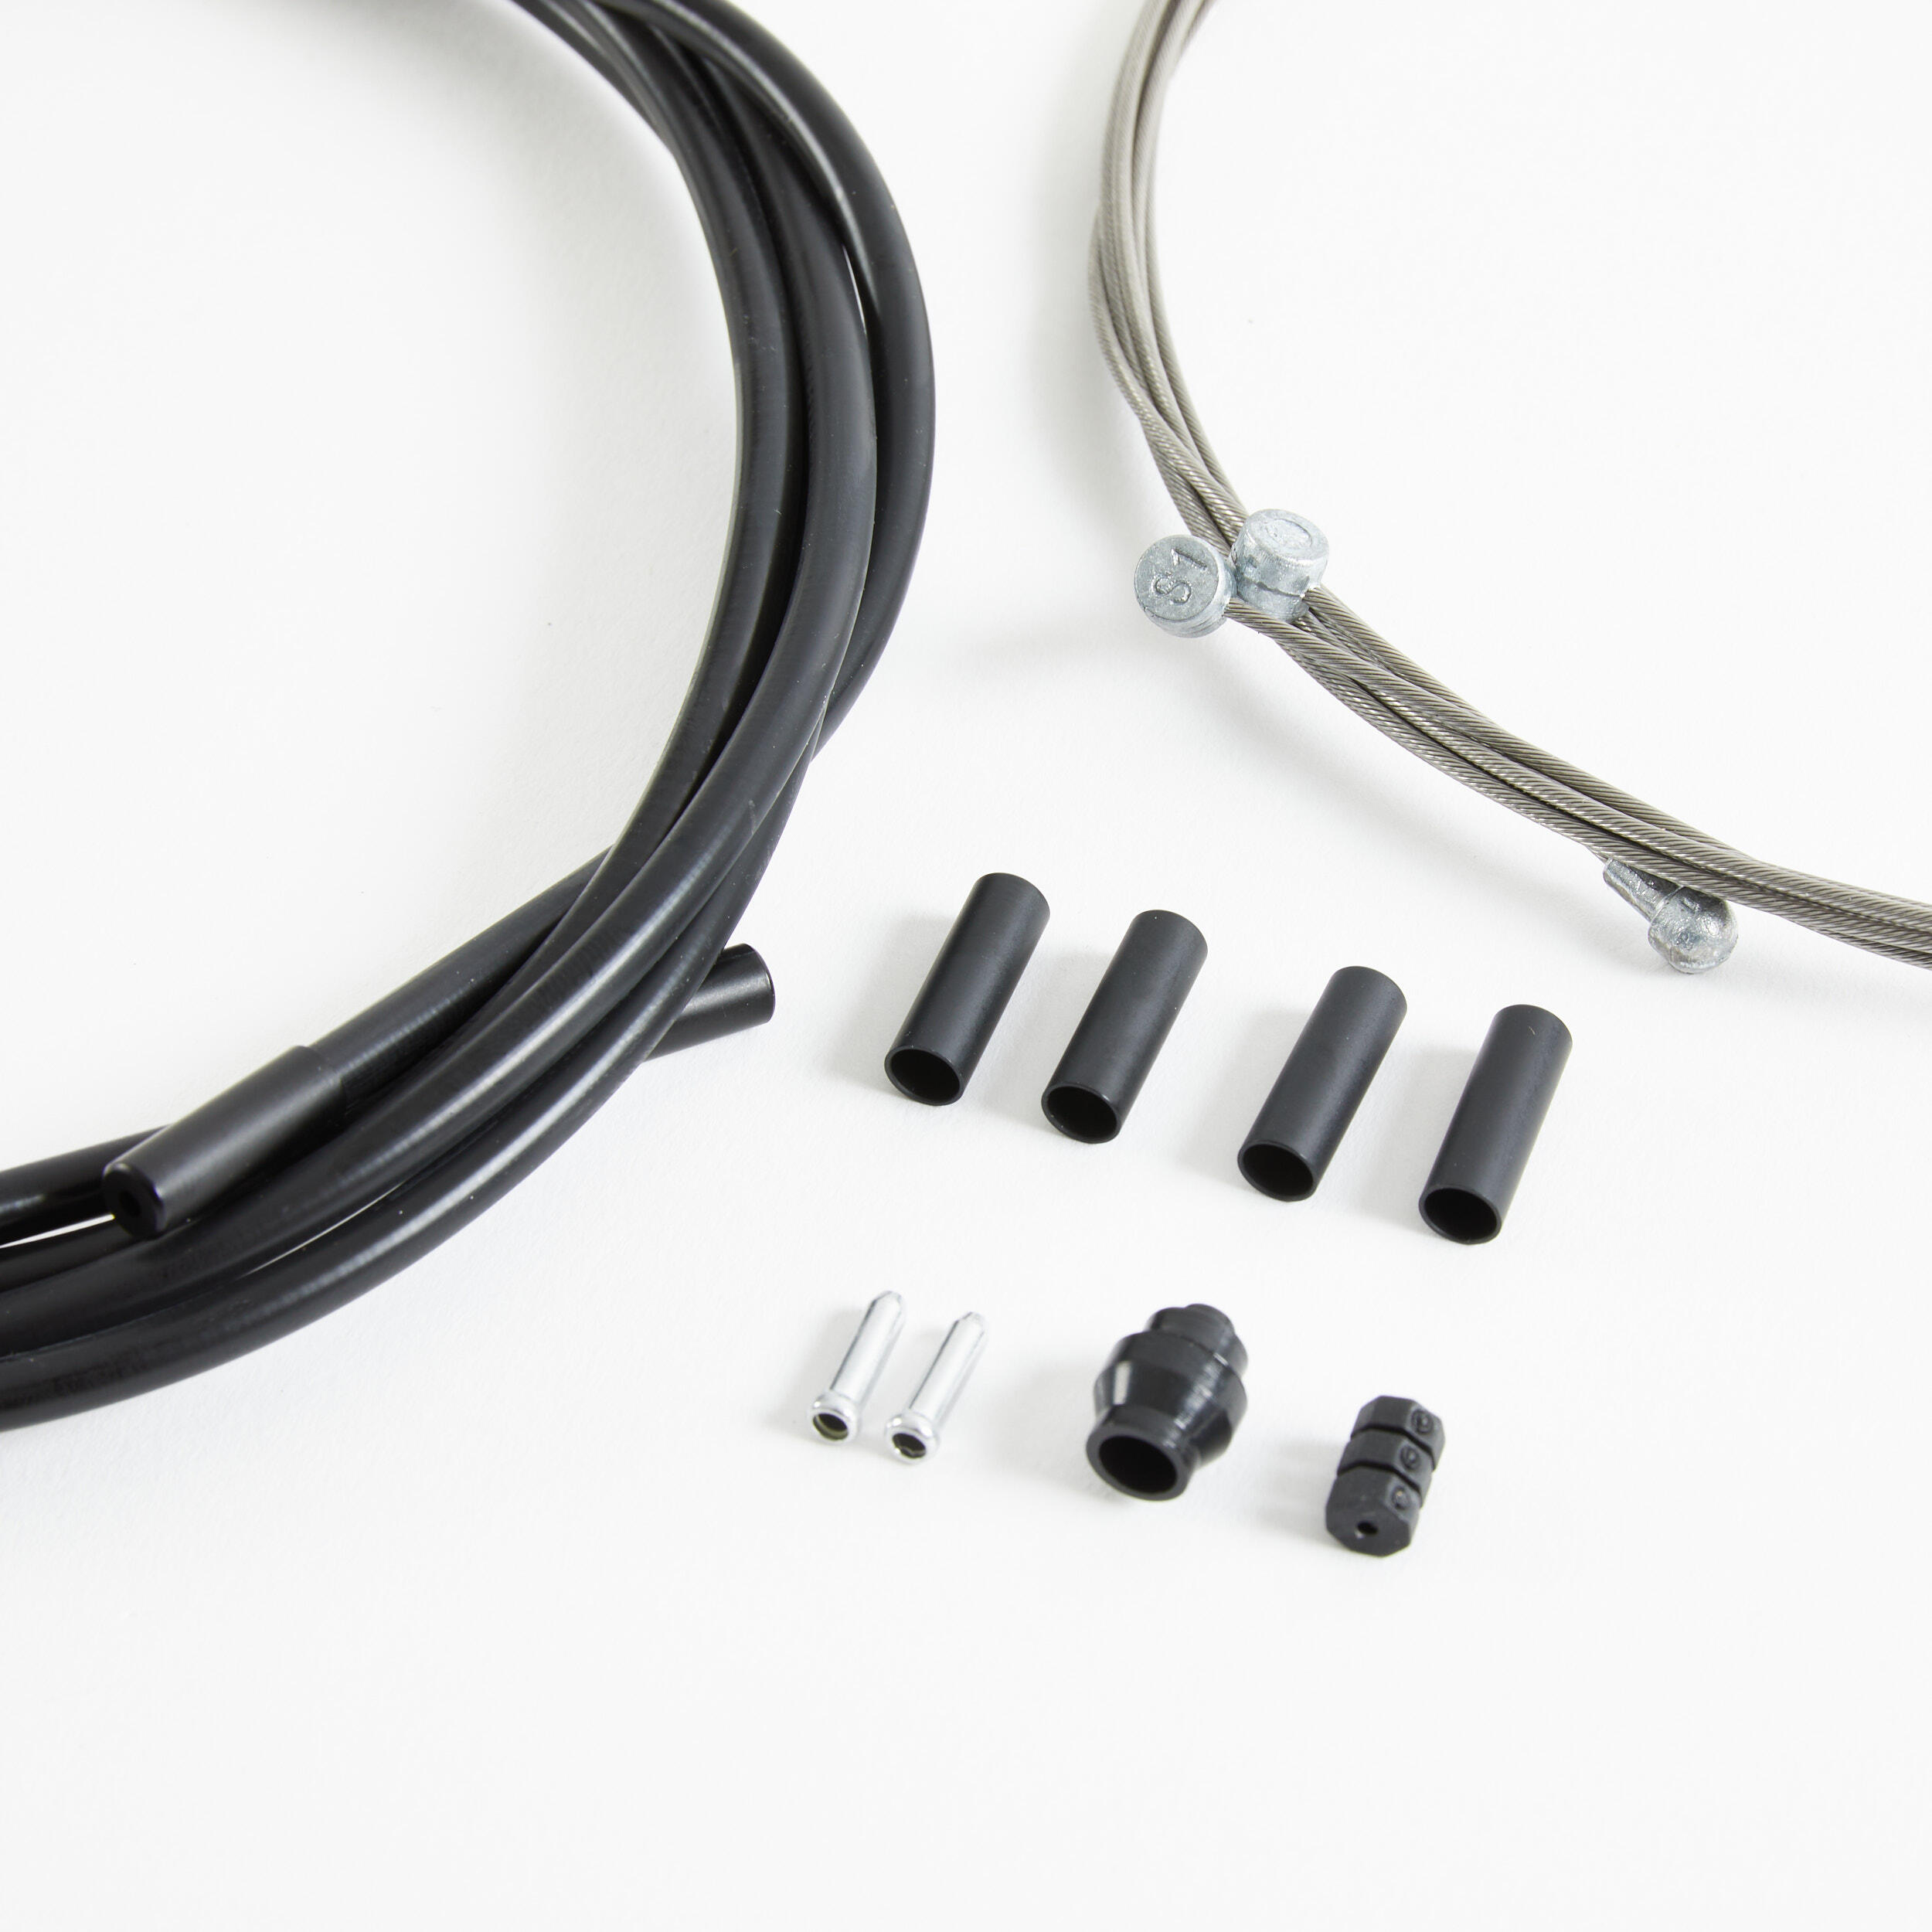 Universal Brake Cable and Housing Kit - DECATHLON